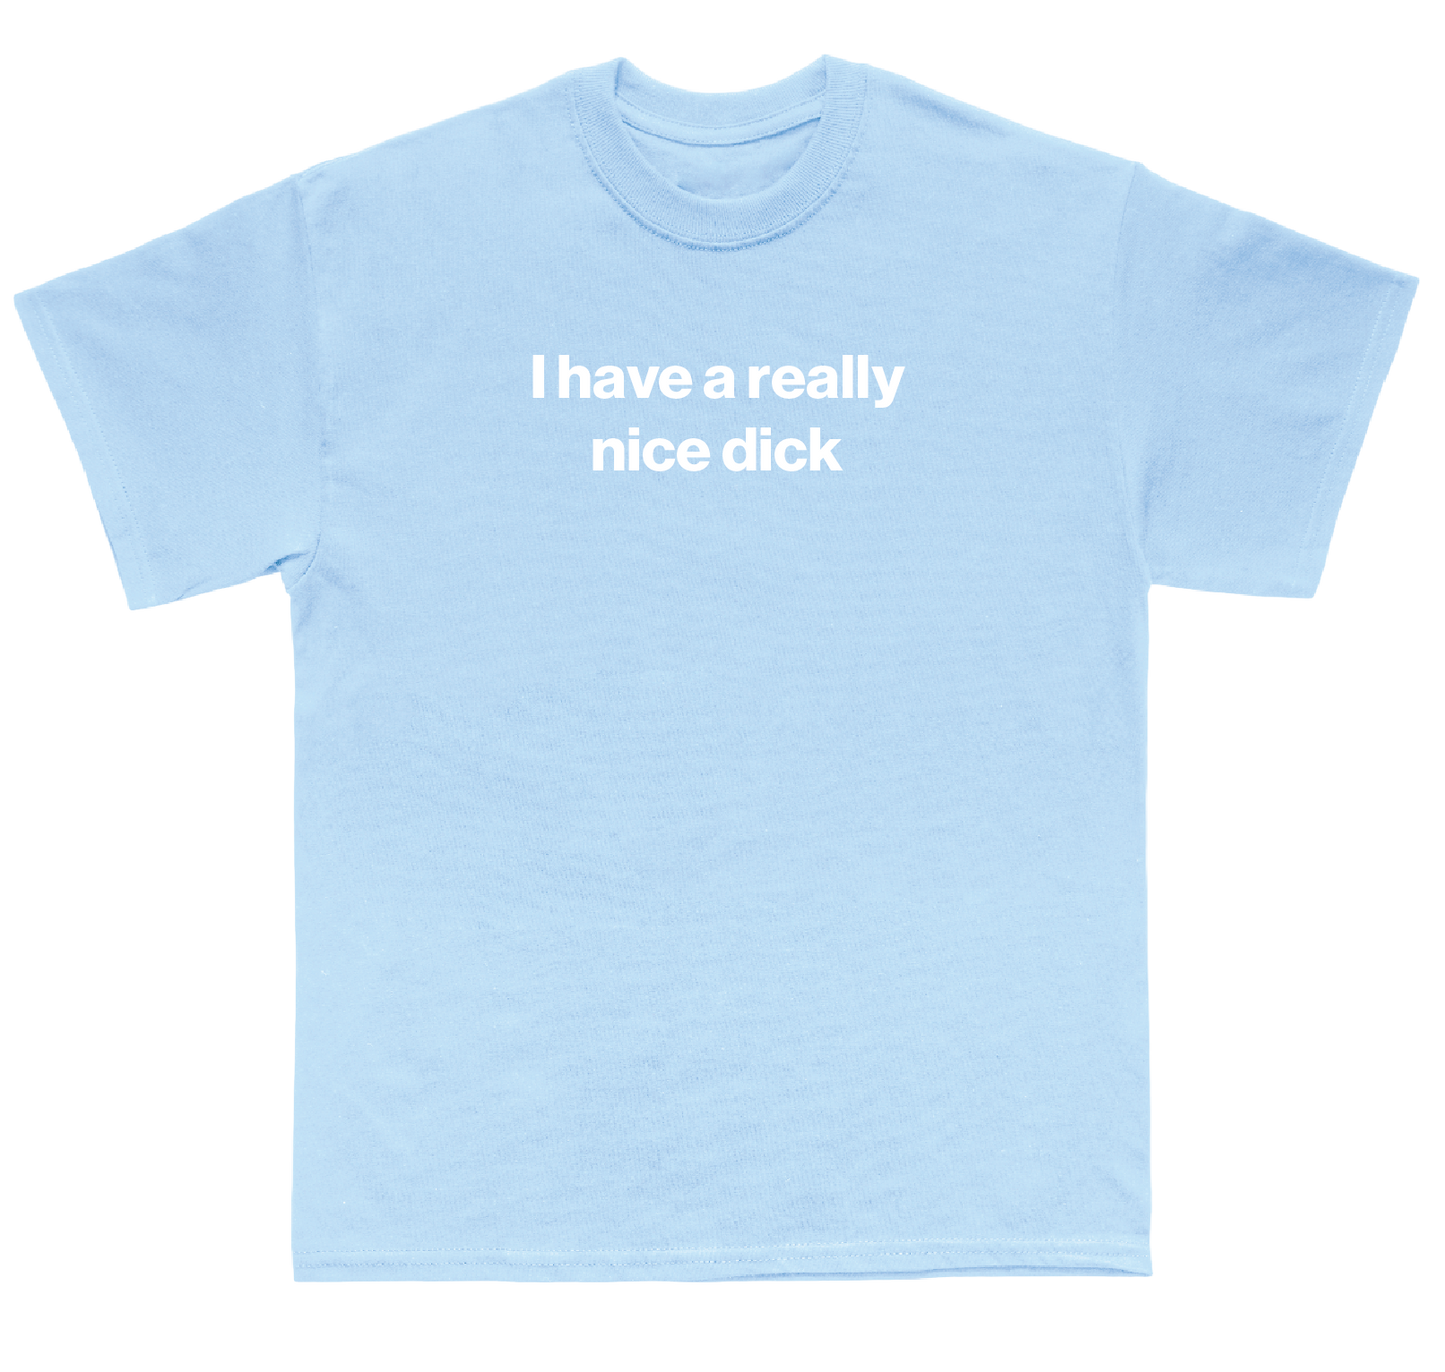 I have a really nice dick shirt